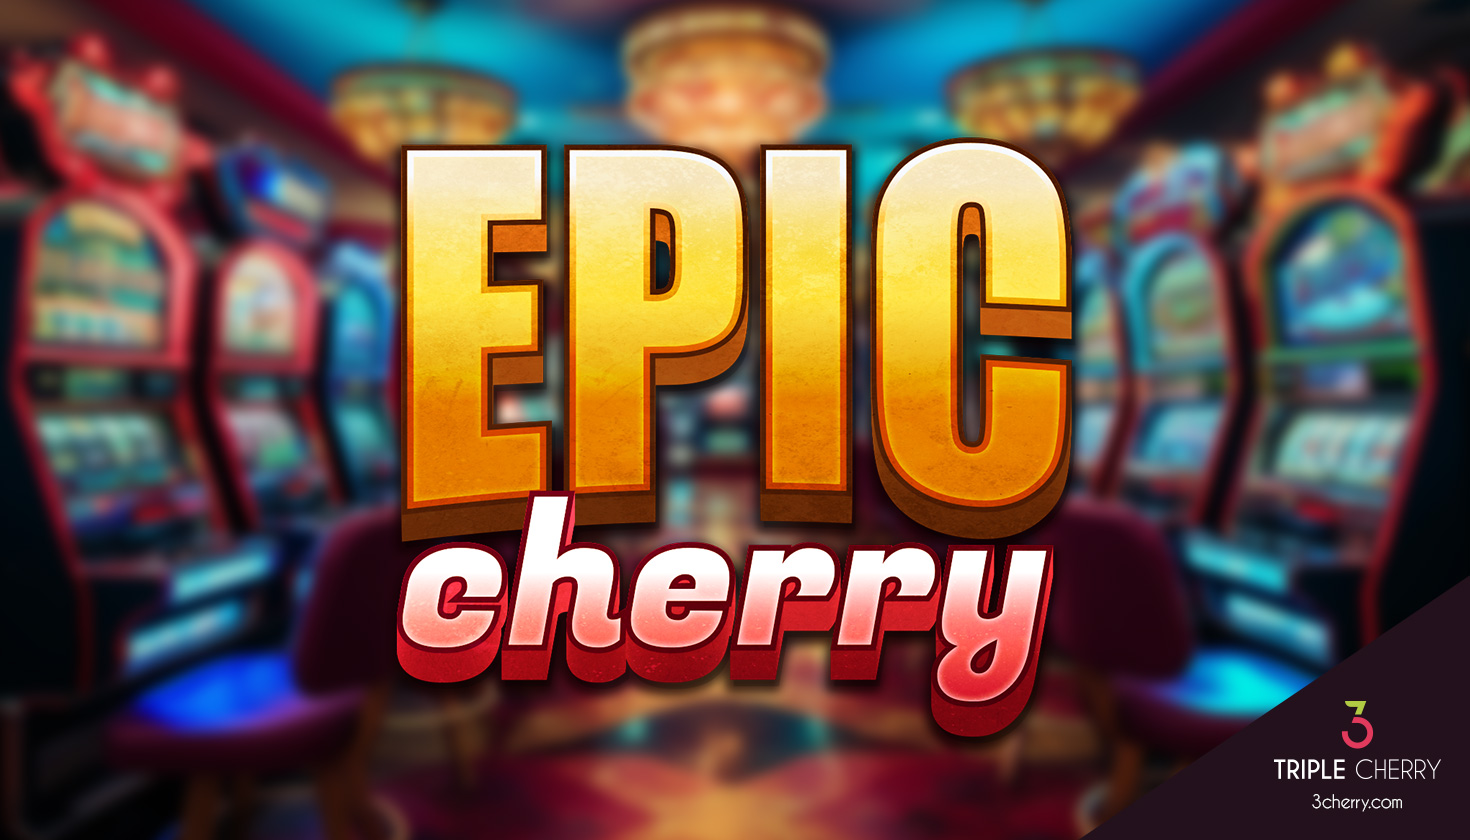 Epic Cherry by Triple Cherry